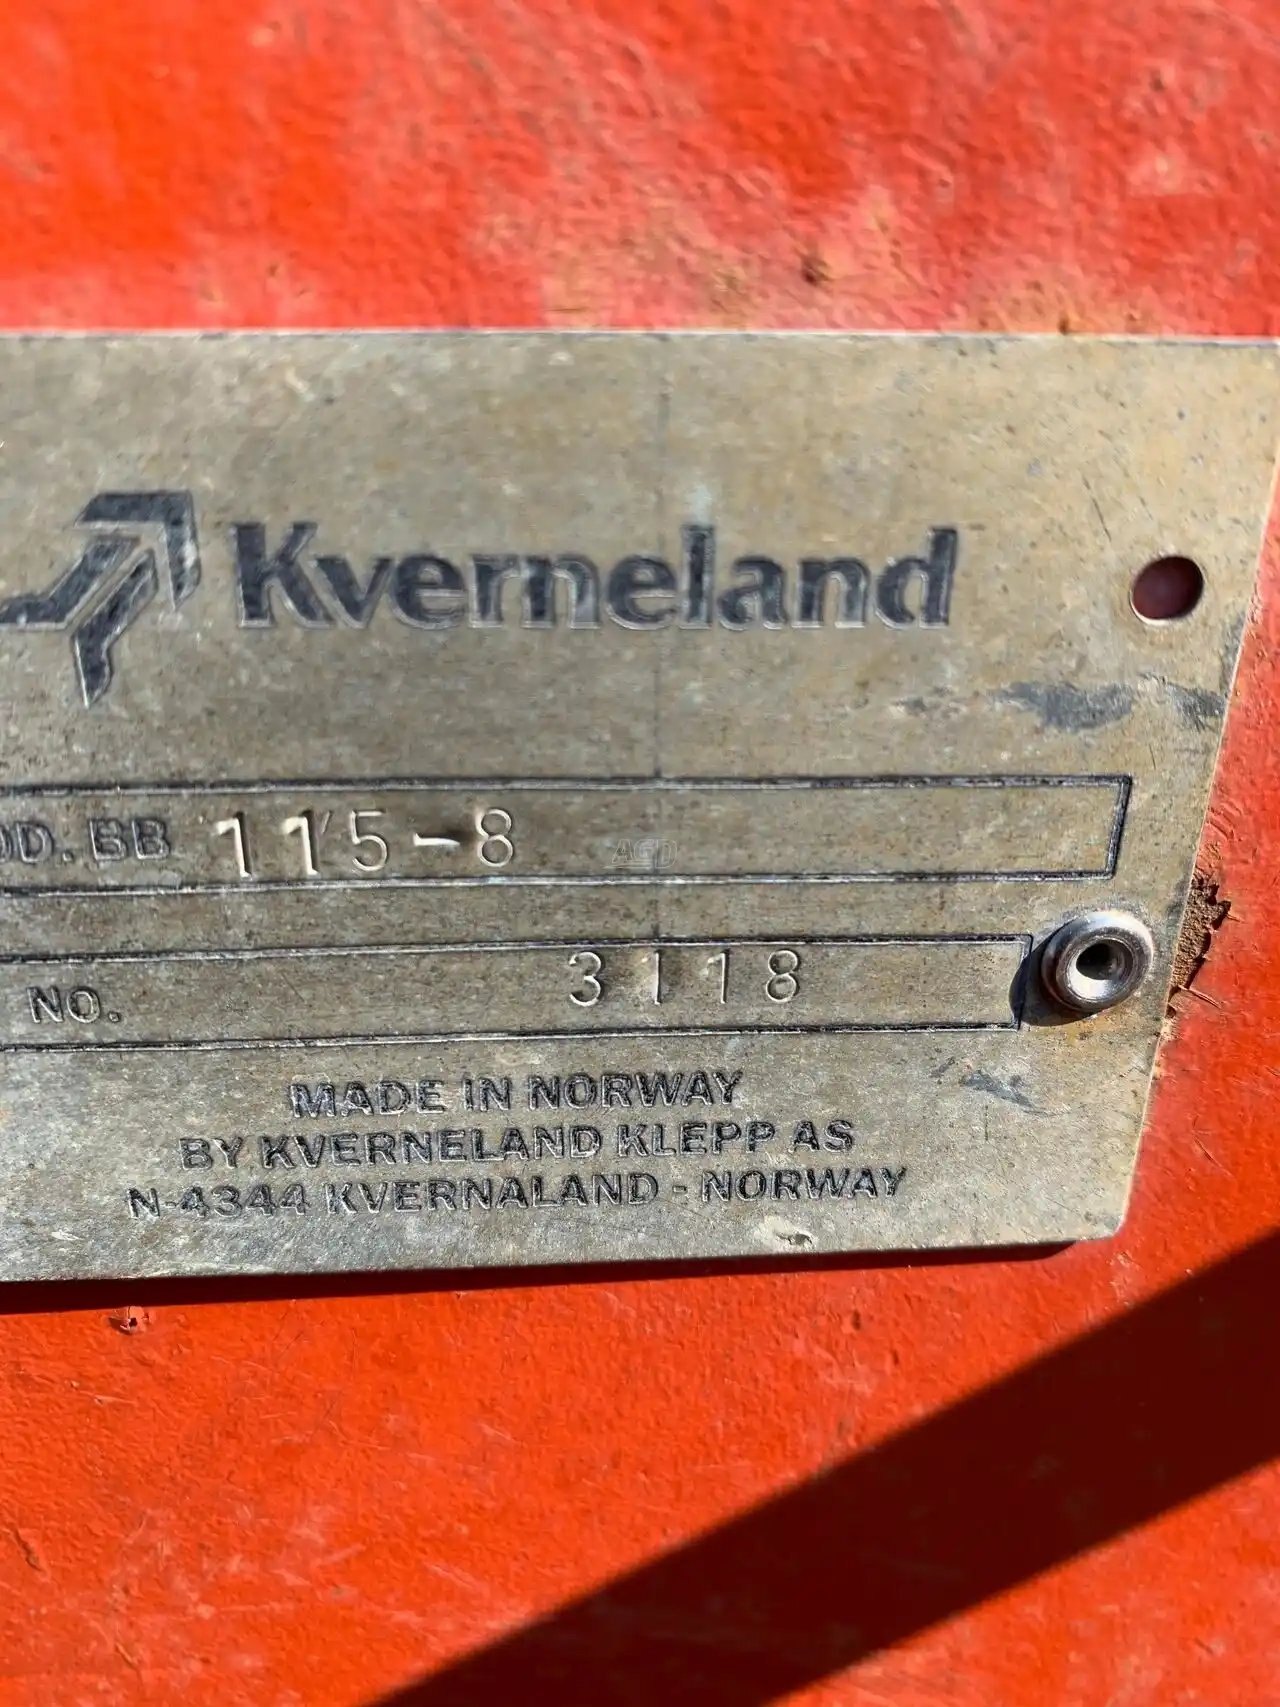 1995 Kverneland BB 115